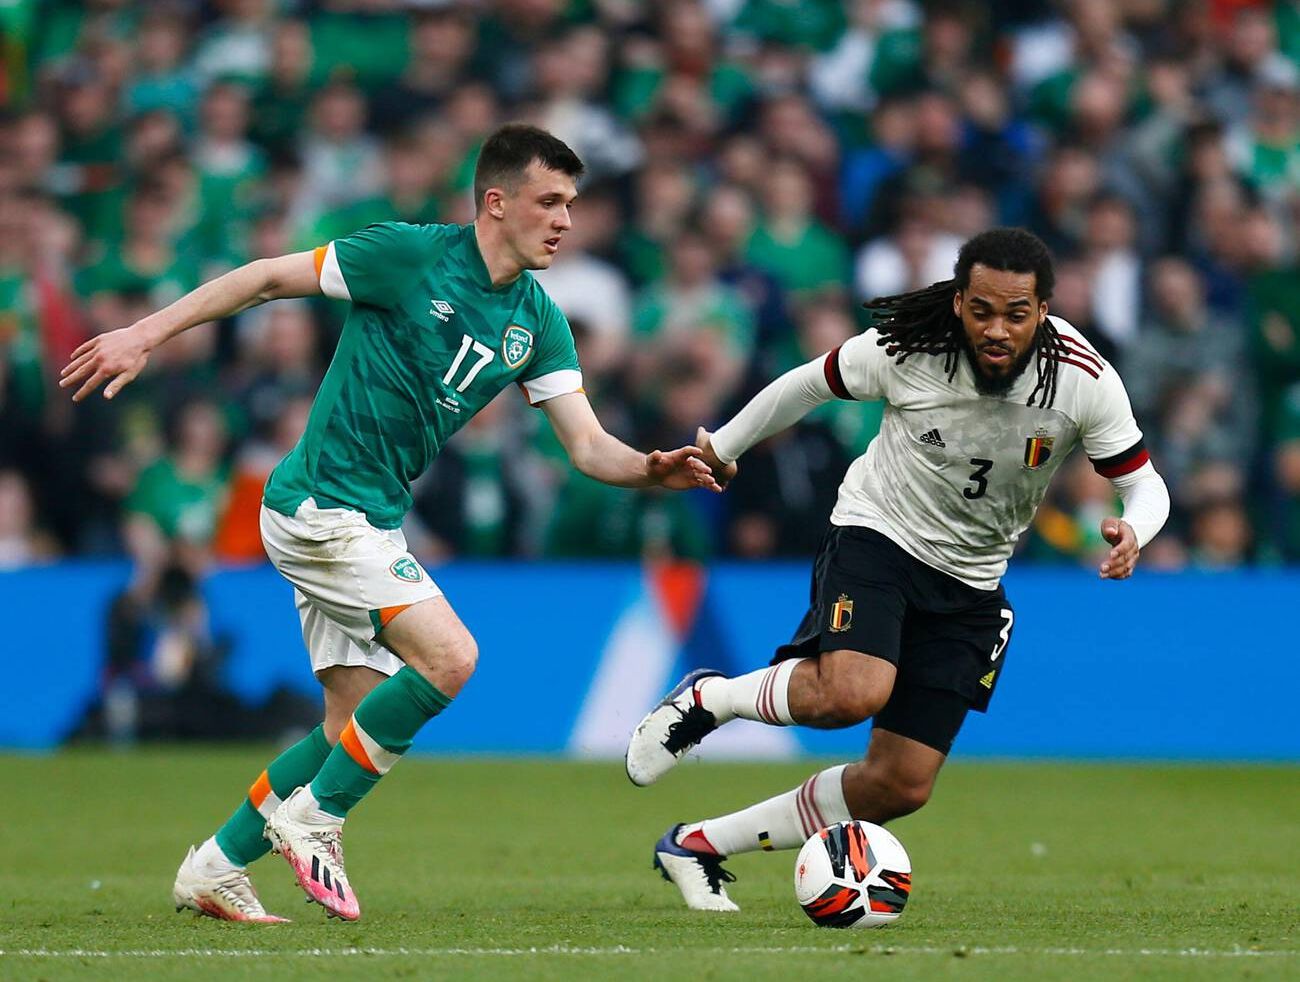 Republic of Ireland vs Belgium: prediction for the international friendly